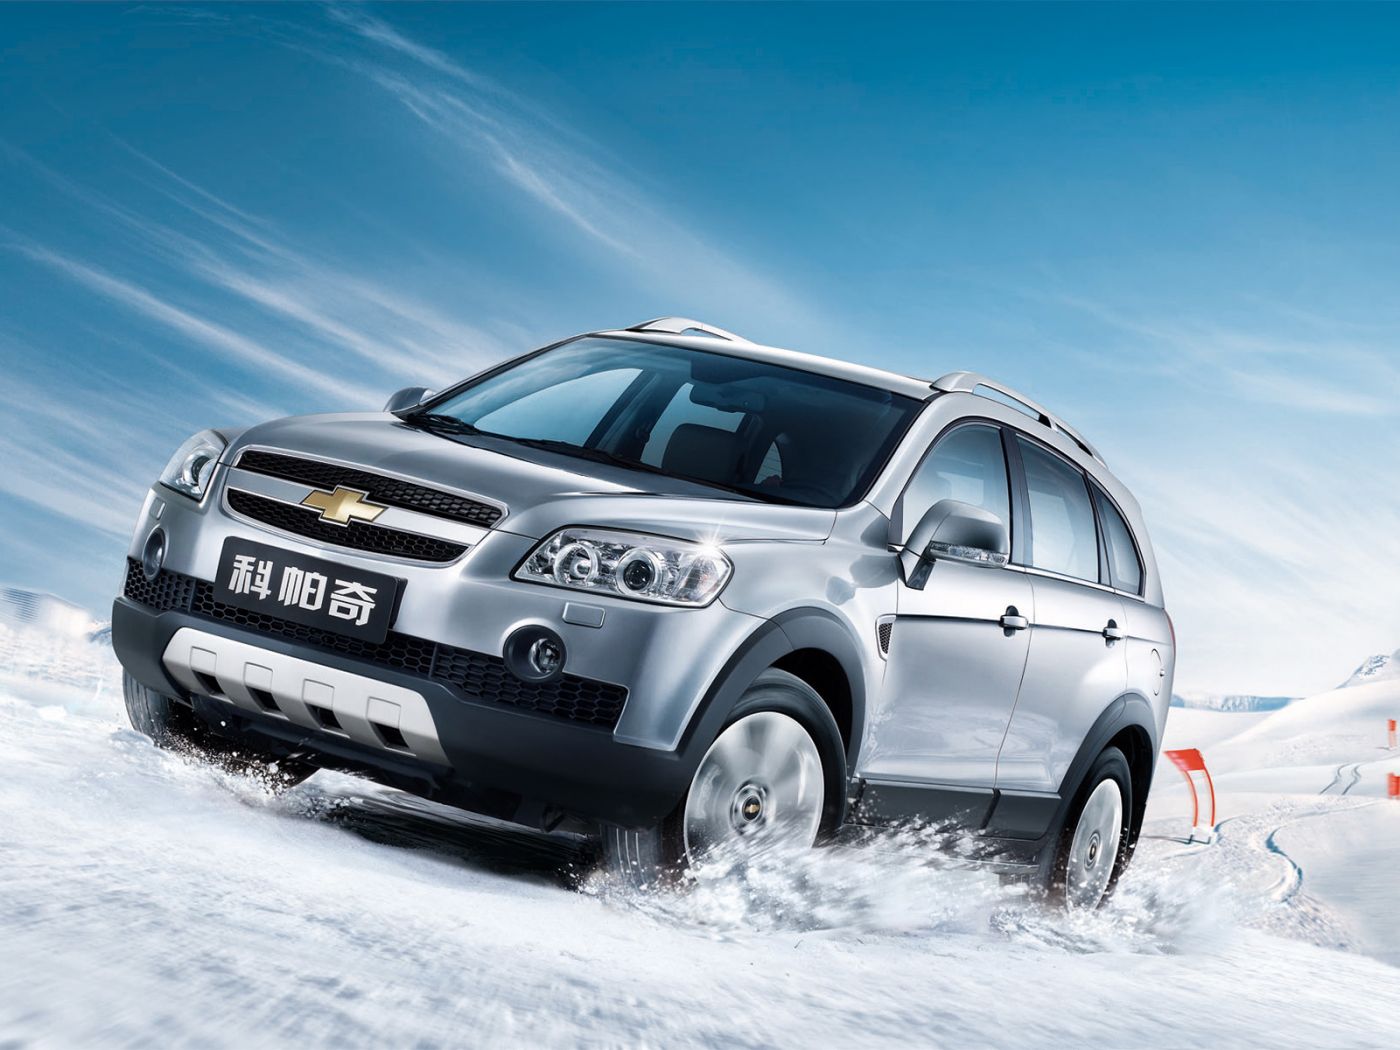 Chevrolet Captiva On Snow Wallpaper 1400x1050